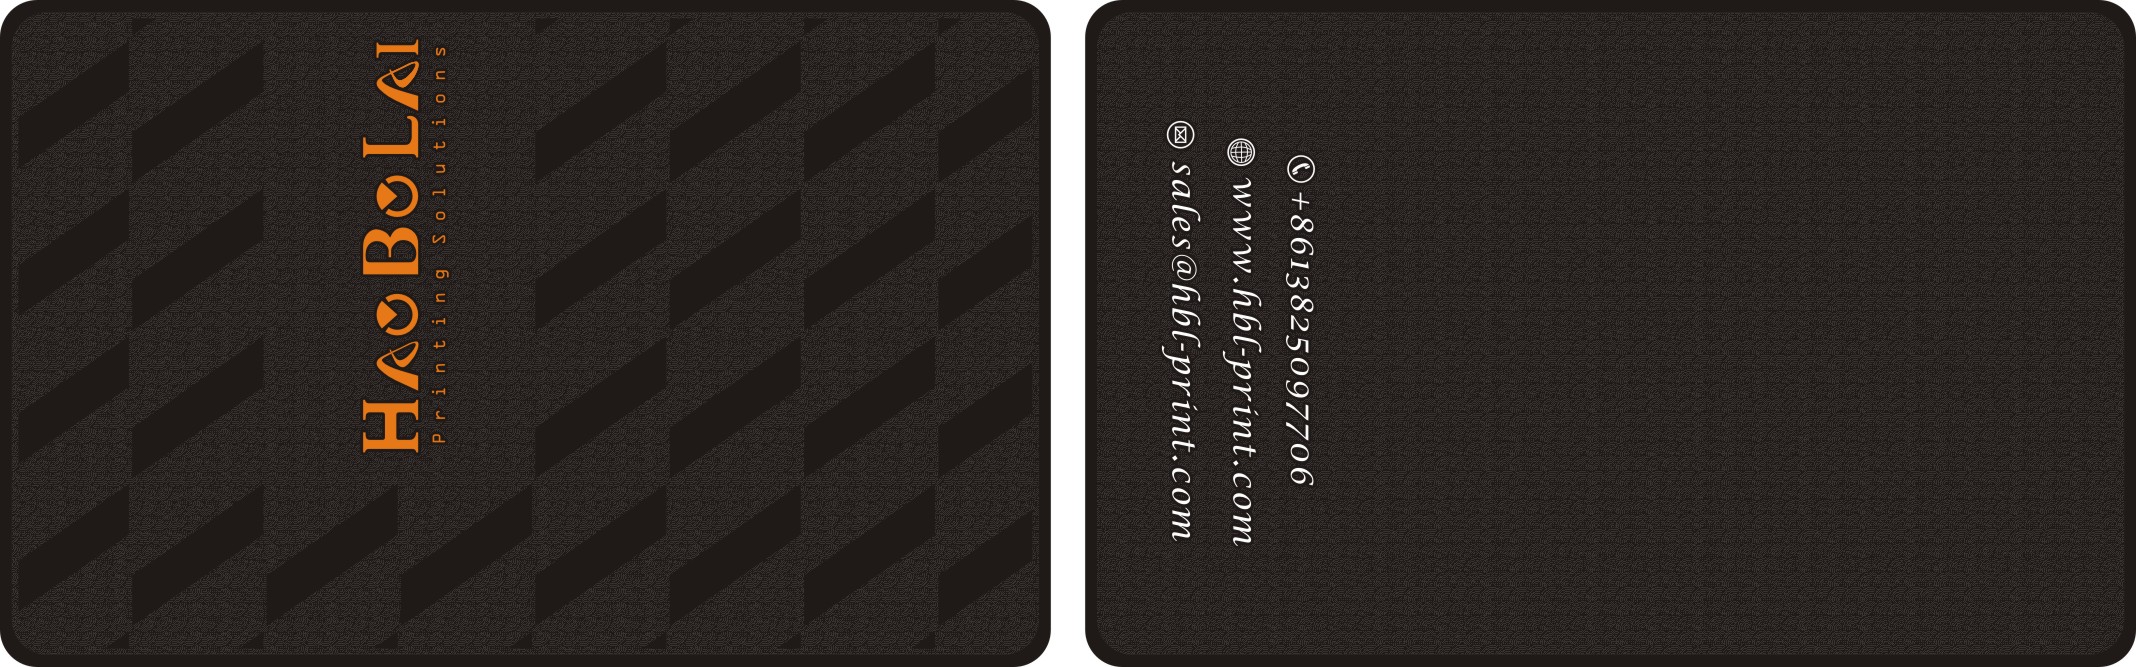 Black Matte Card Template (25)